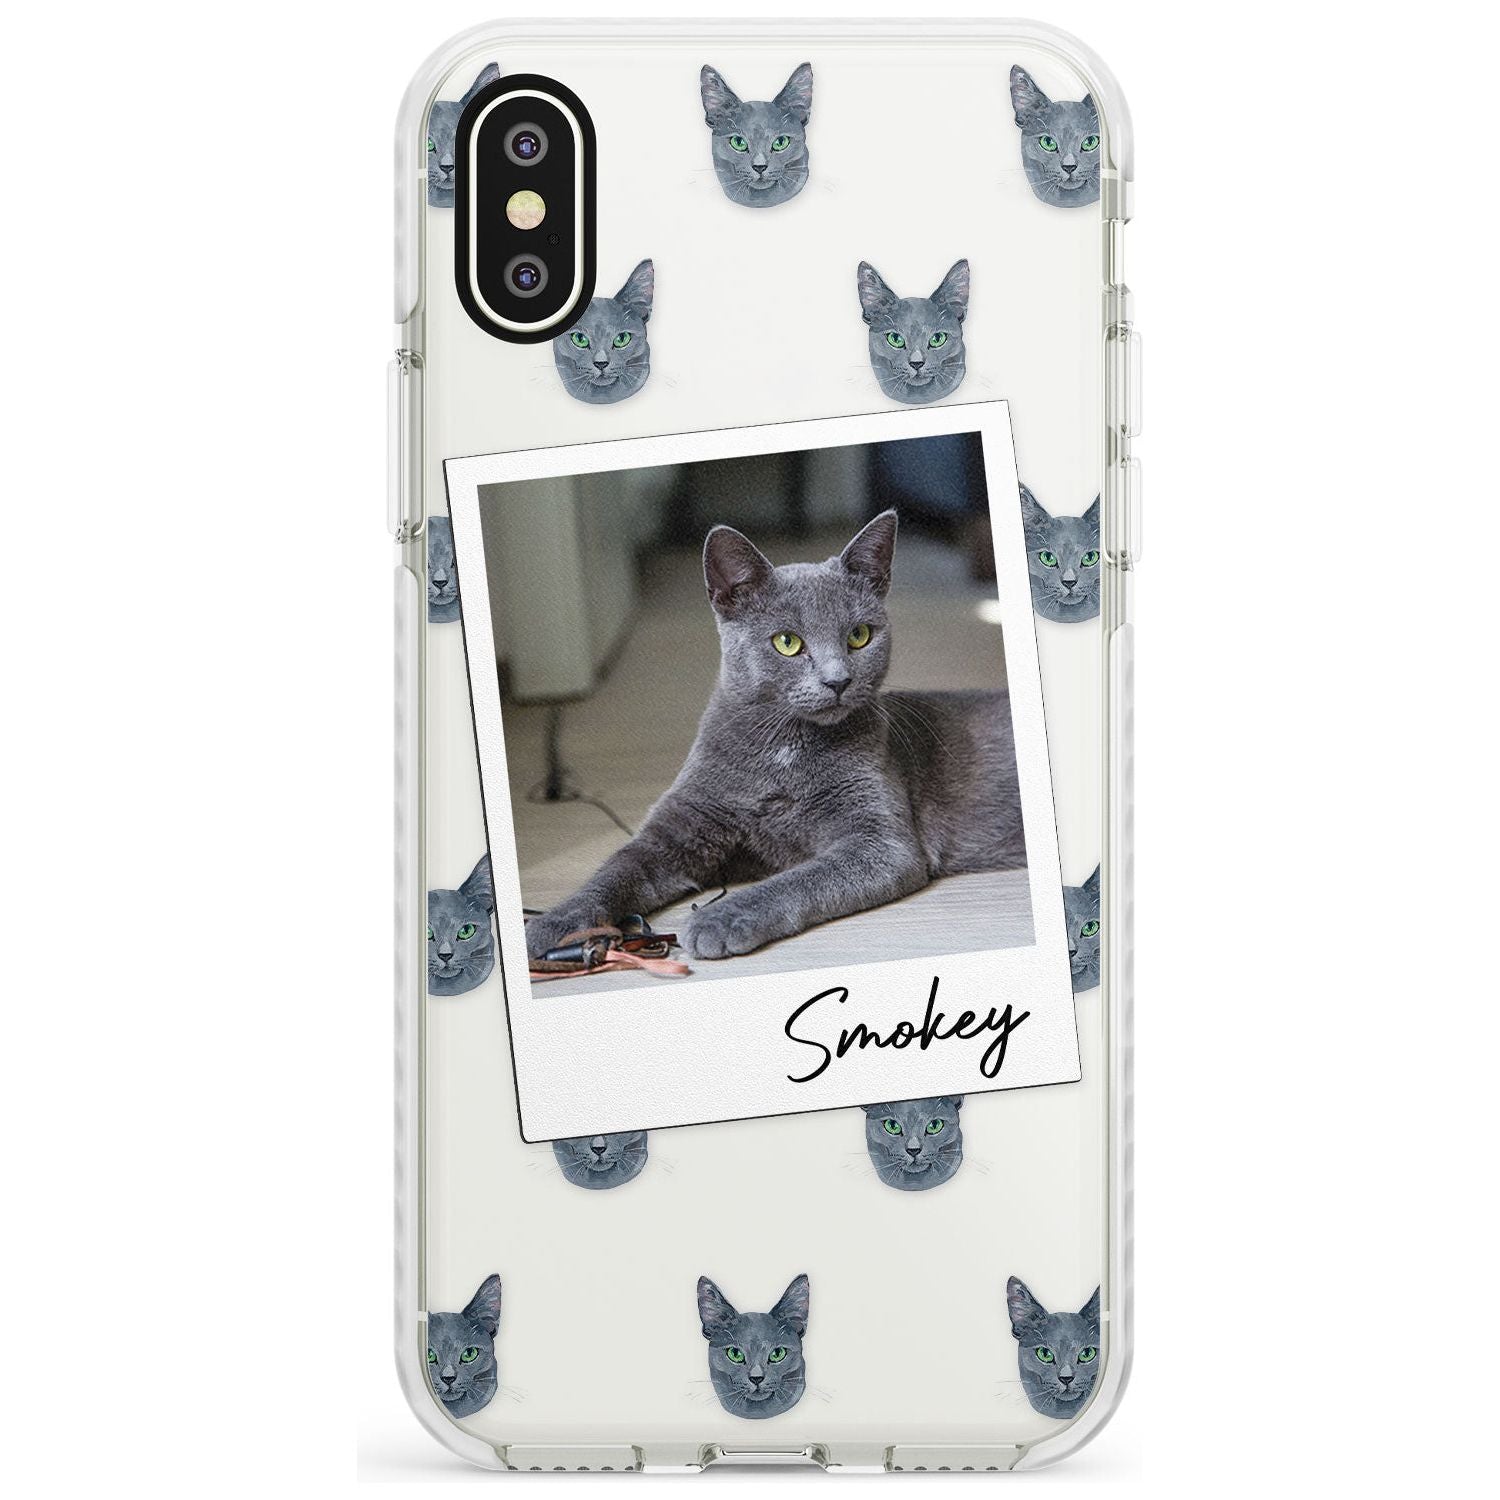 Personalised Korat Cat Photo Impact Phone Case for iPhone X XS Max XR